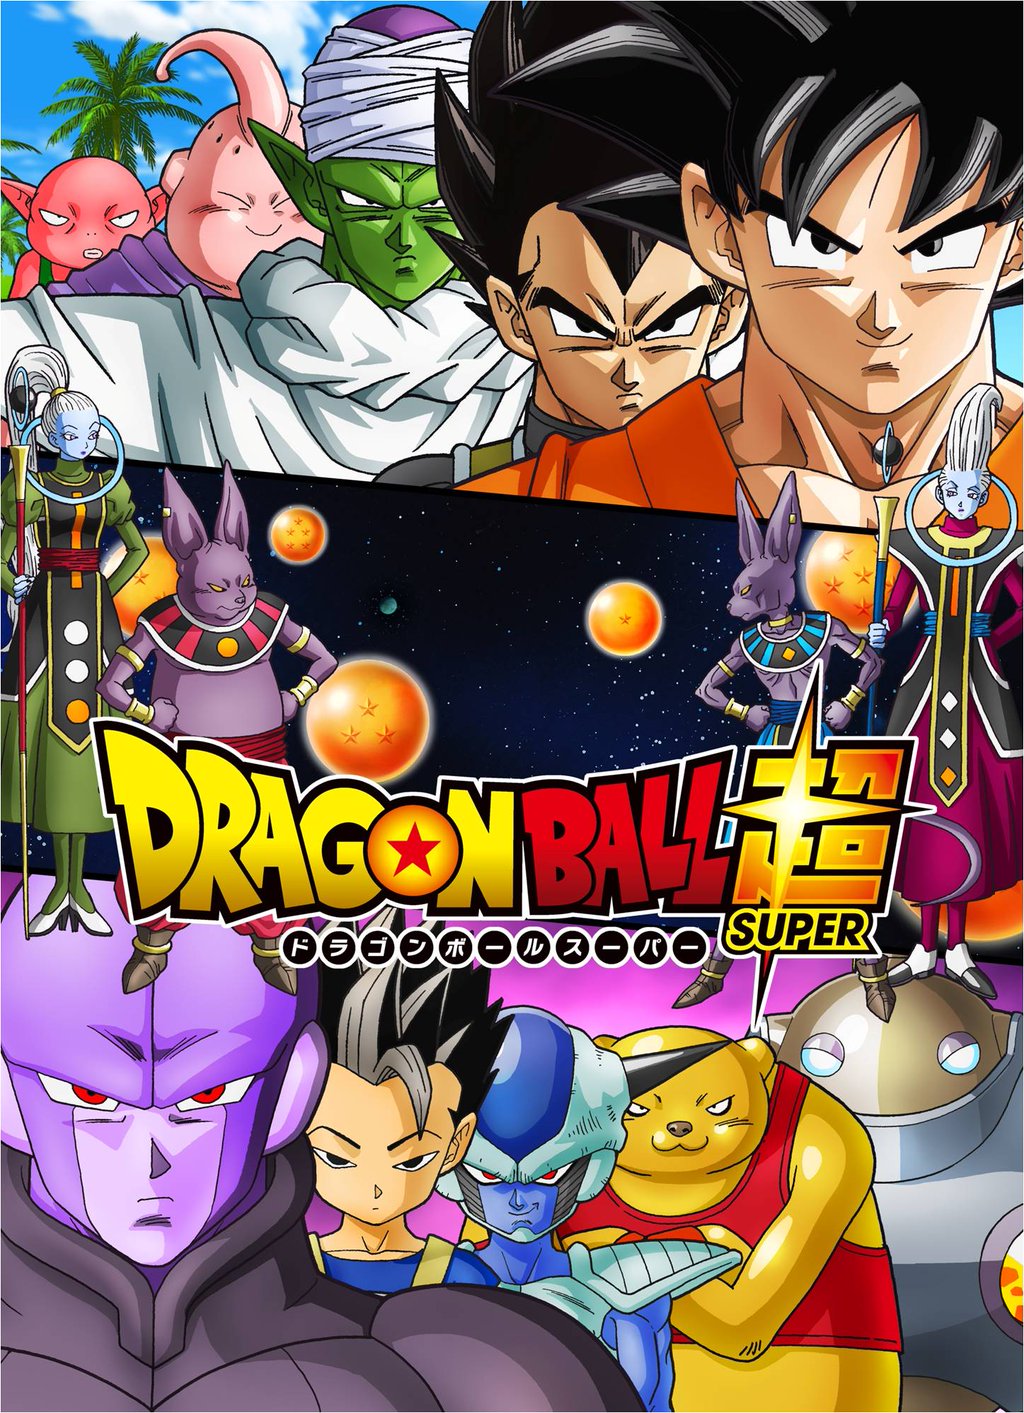 DUB] Dragon Ball Super - Episode #48 - Discussion Thread! : r/dbz